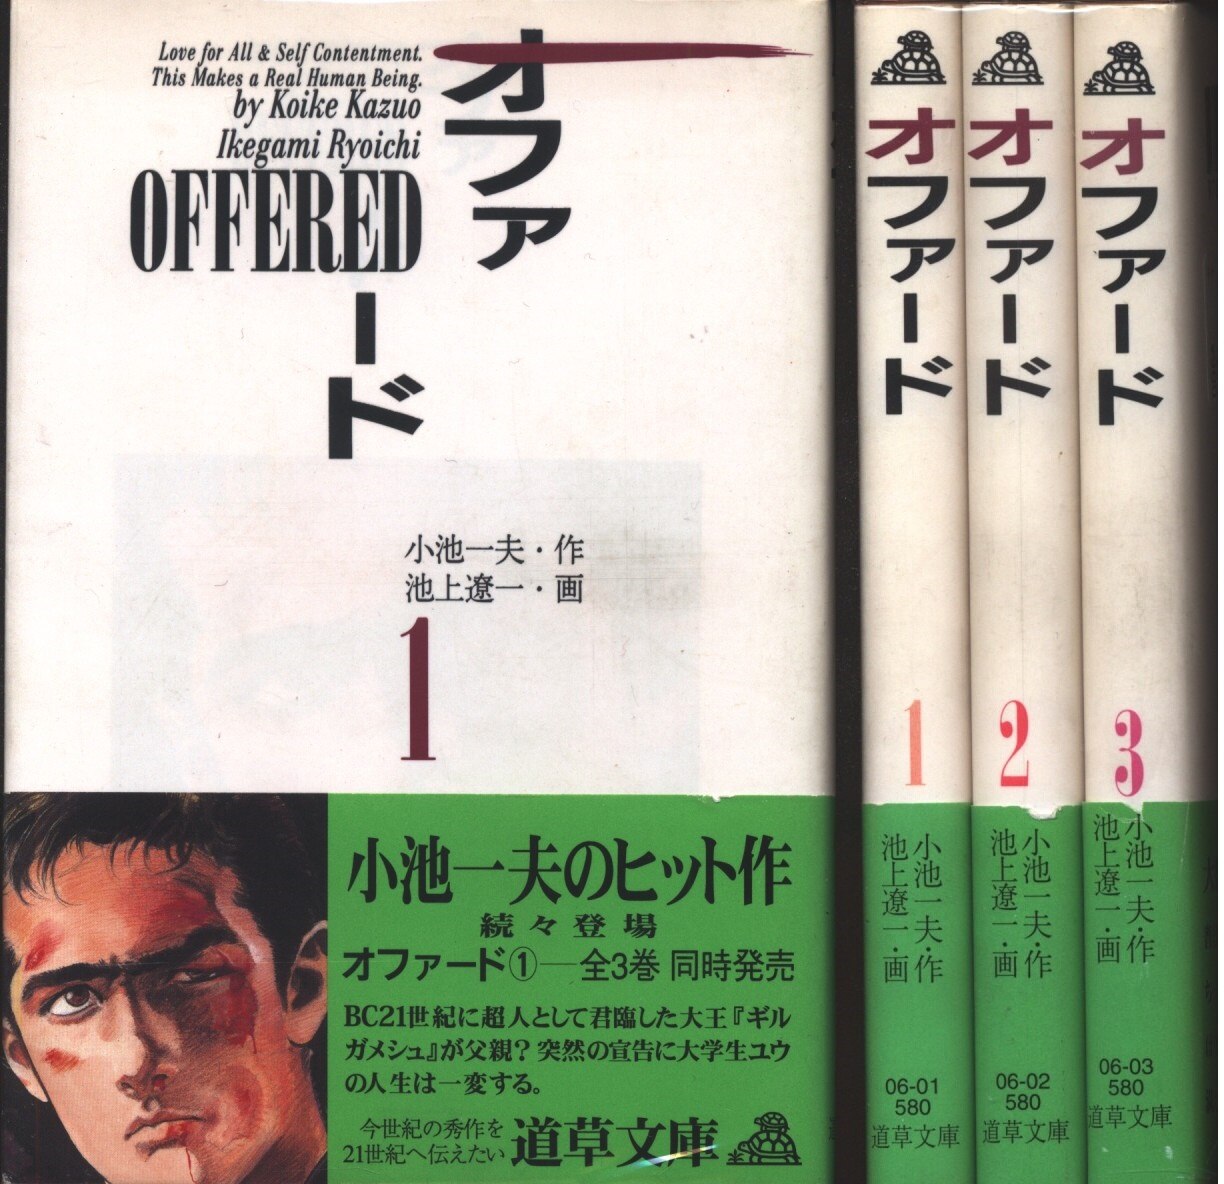 Ryoichi Ikegami Offered Paperback Edition All 3 Volumes Set Mandarake 在线商店